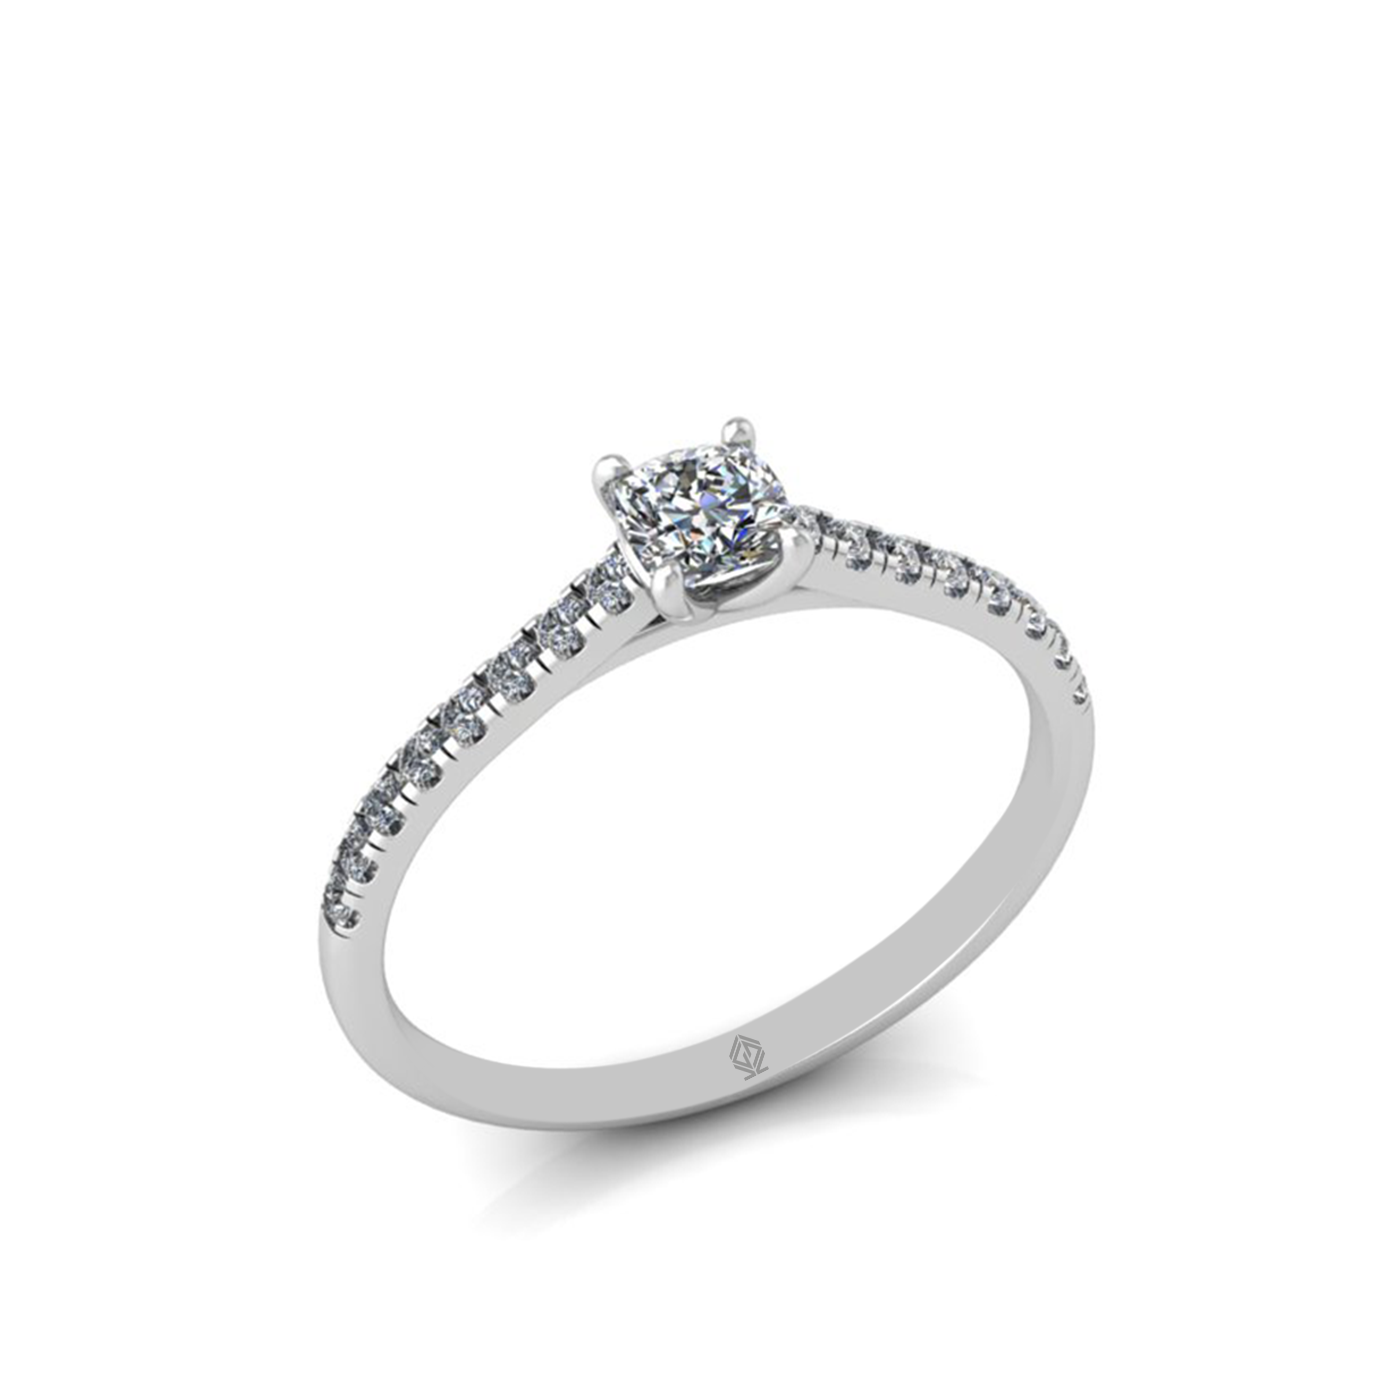 18k white gold  0,30 ct 4 prongs cushion cut diamond engagement ring with whisper thin pavÉ set band